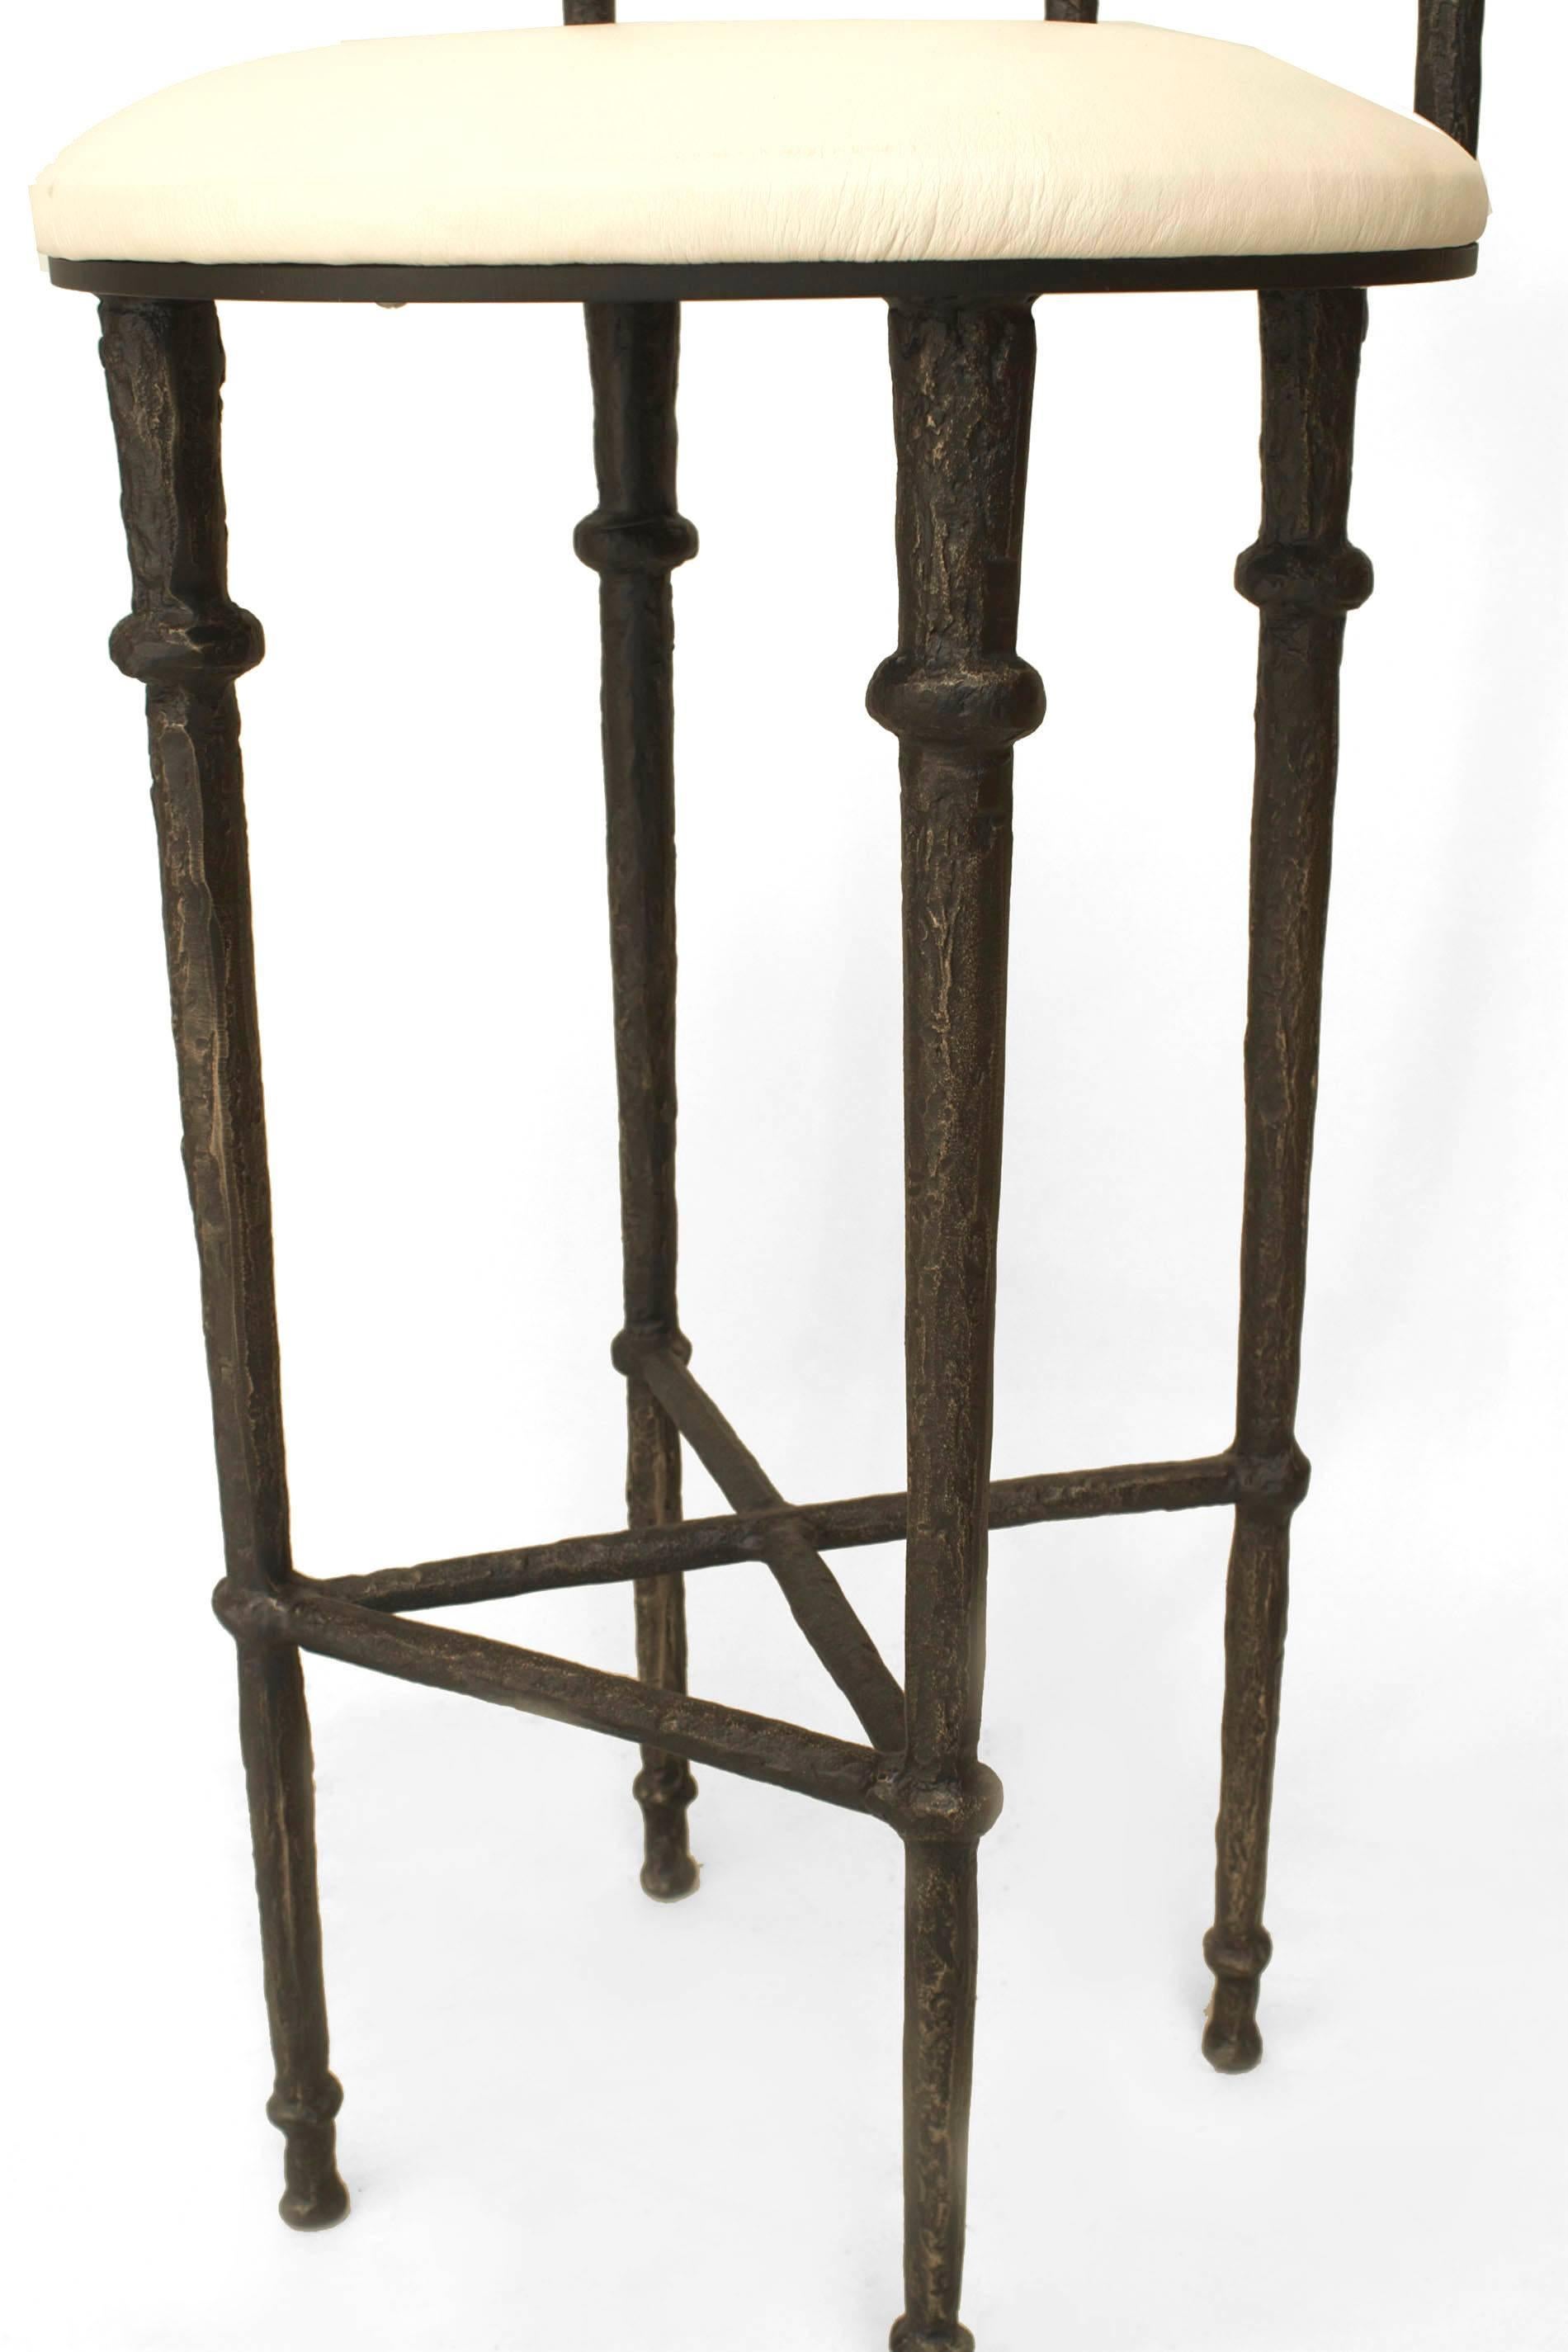 Postwar design (Giacometti style) (Modern) textured dark bronze patina round back bar stool with a white seat (30